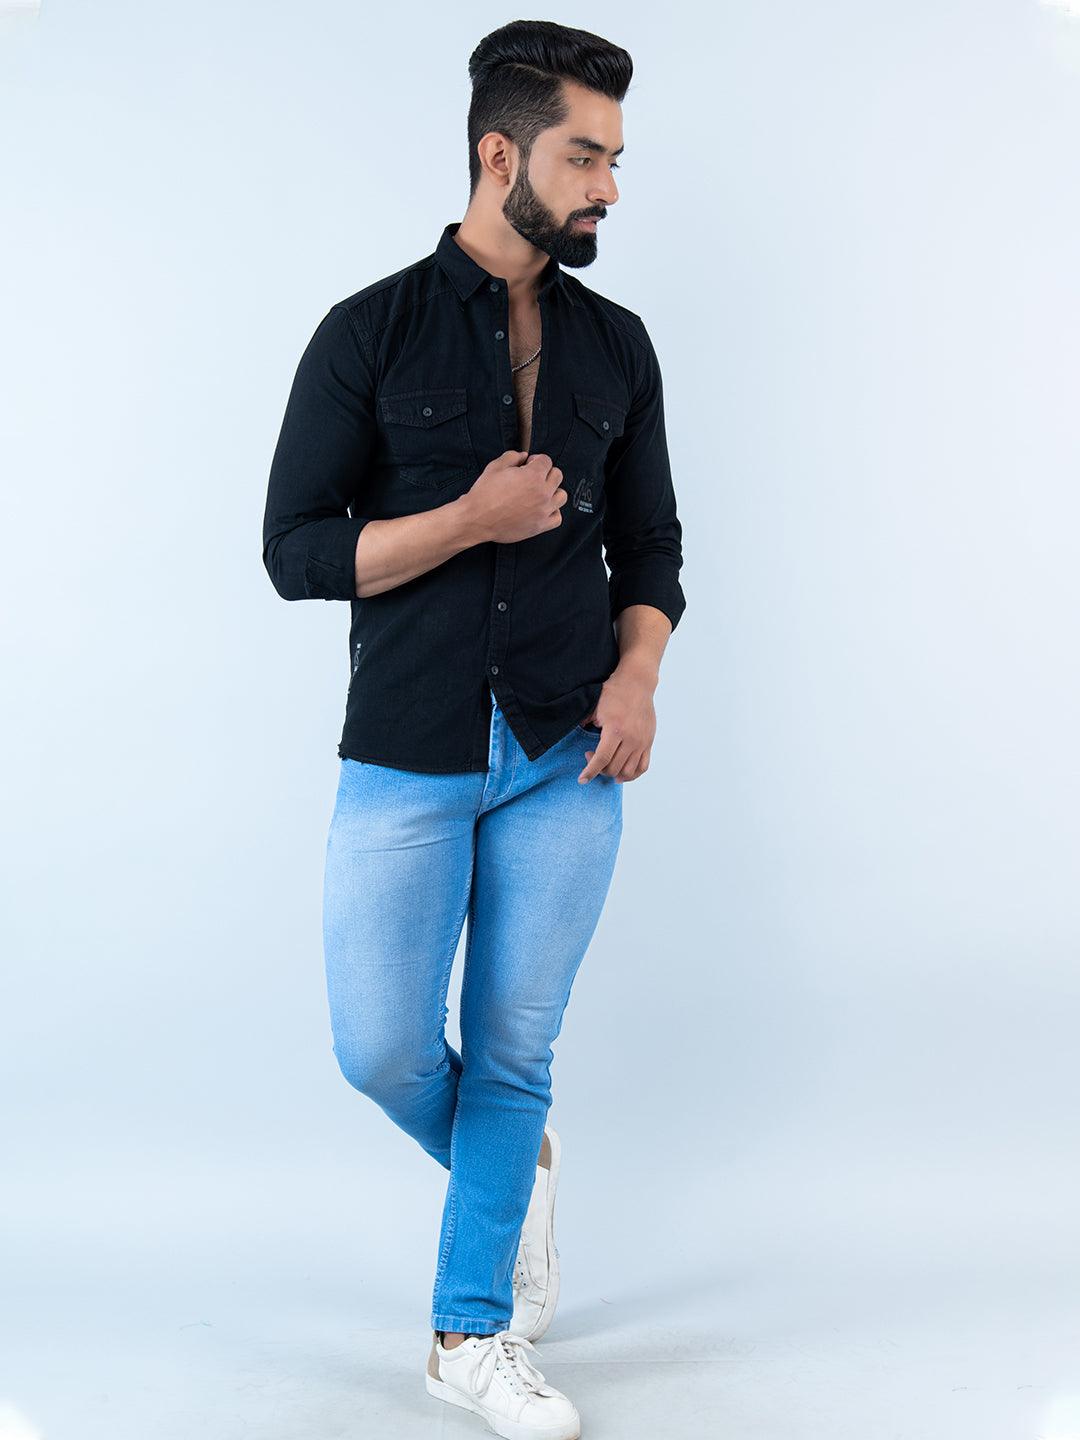 Denim Shirt and Black Jeans - Venti Fashion